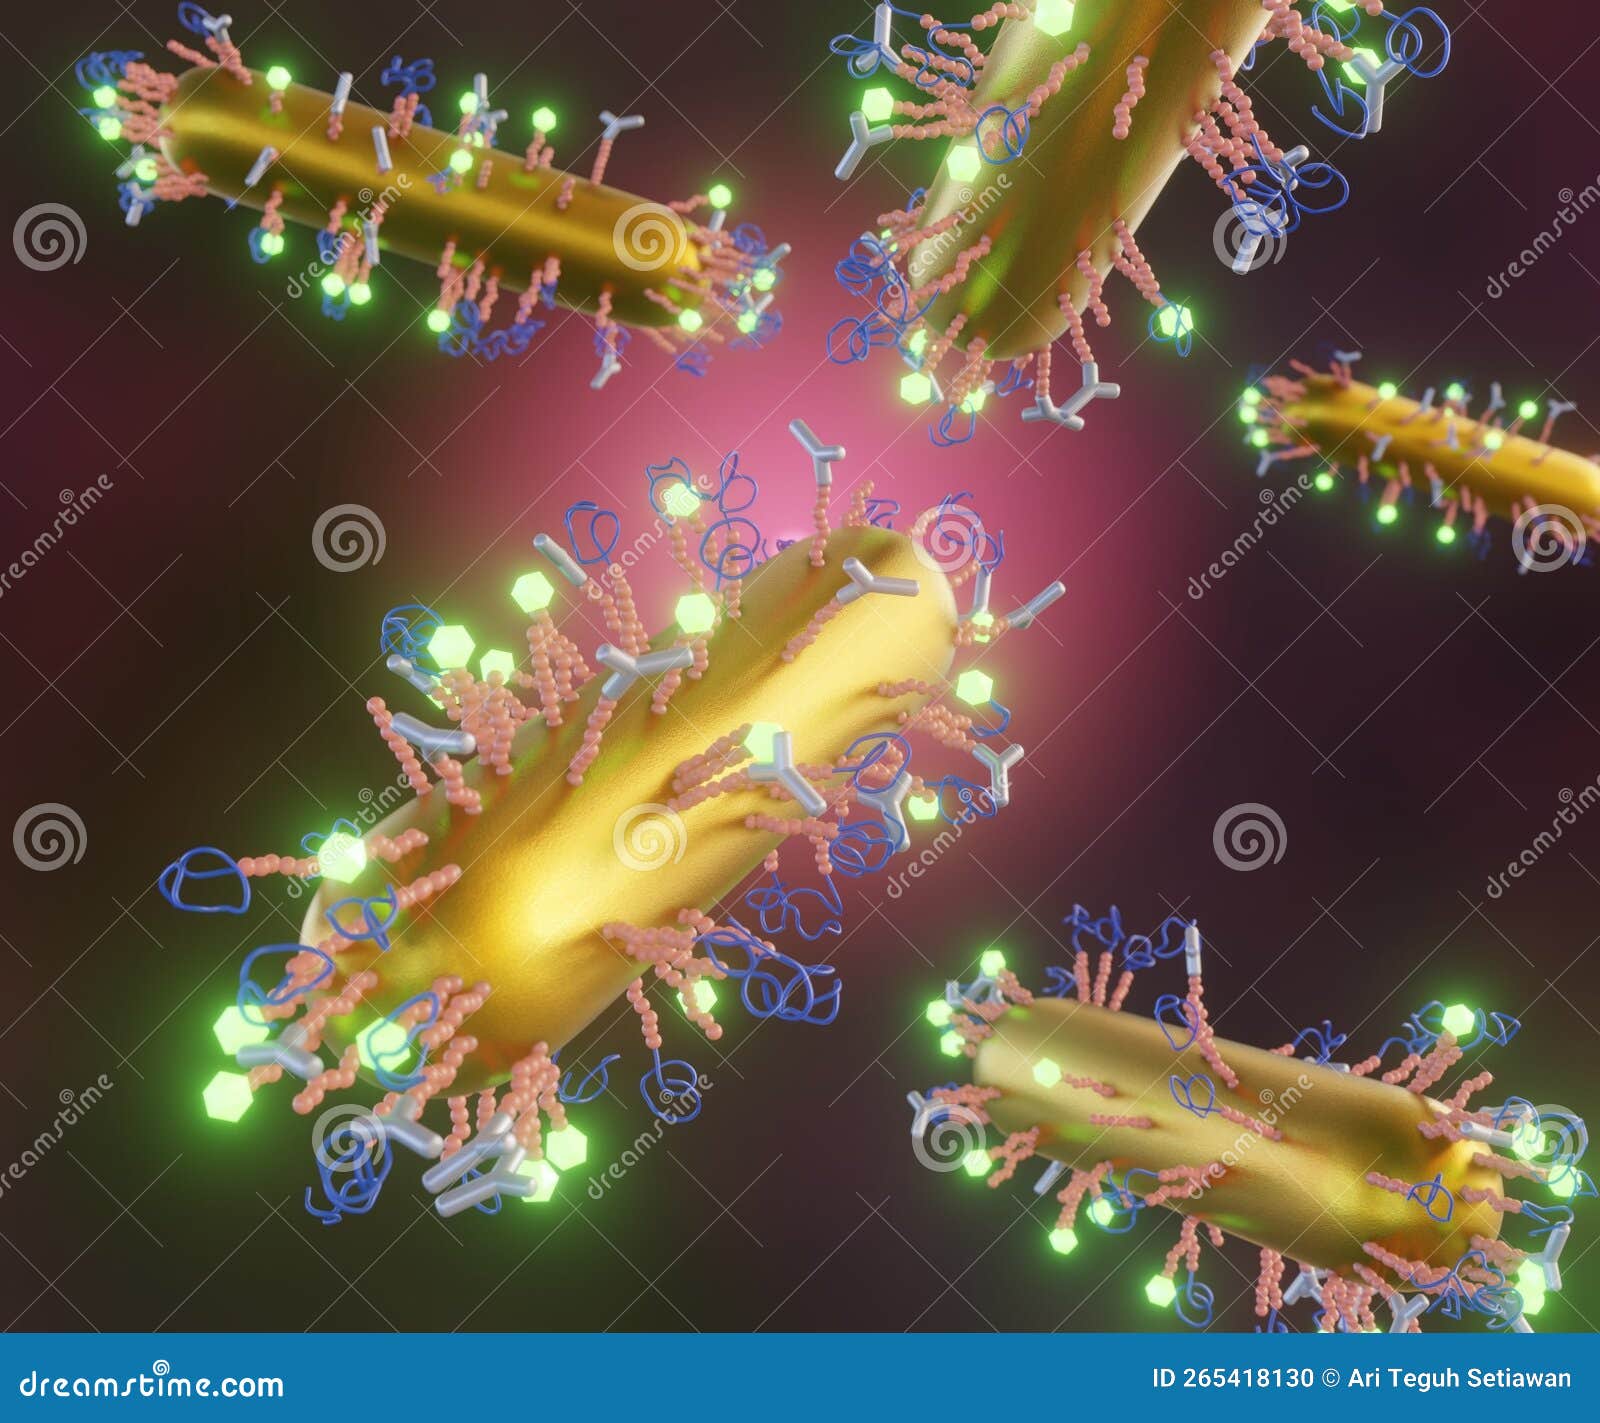 rod  gold nanoparticle conjugates peptides as biosensor